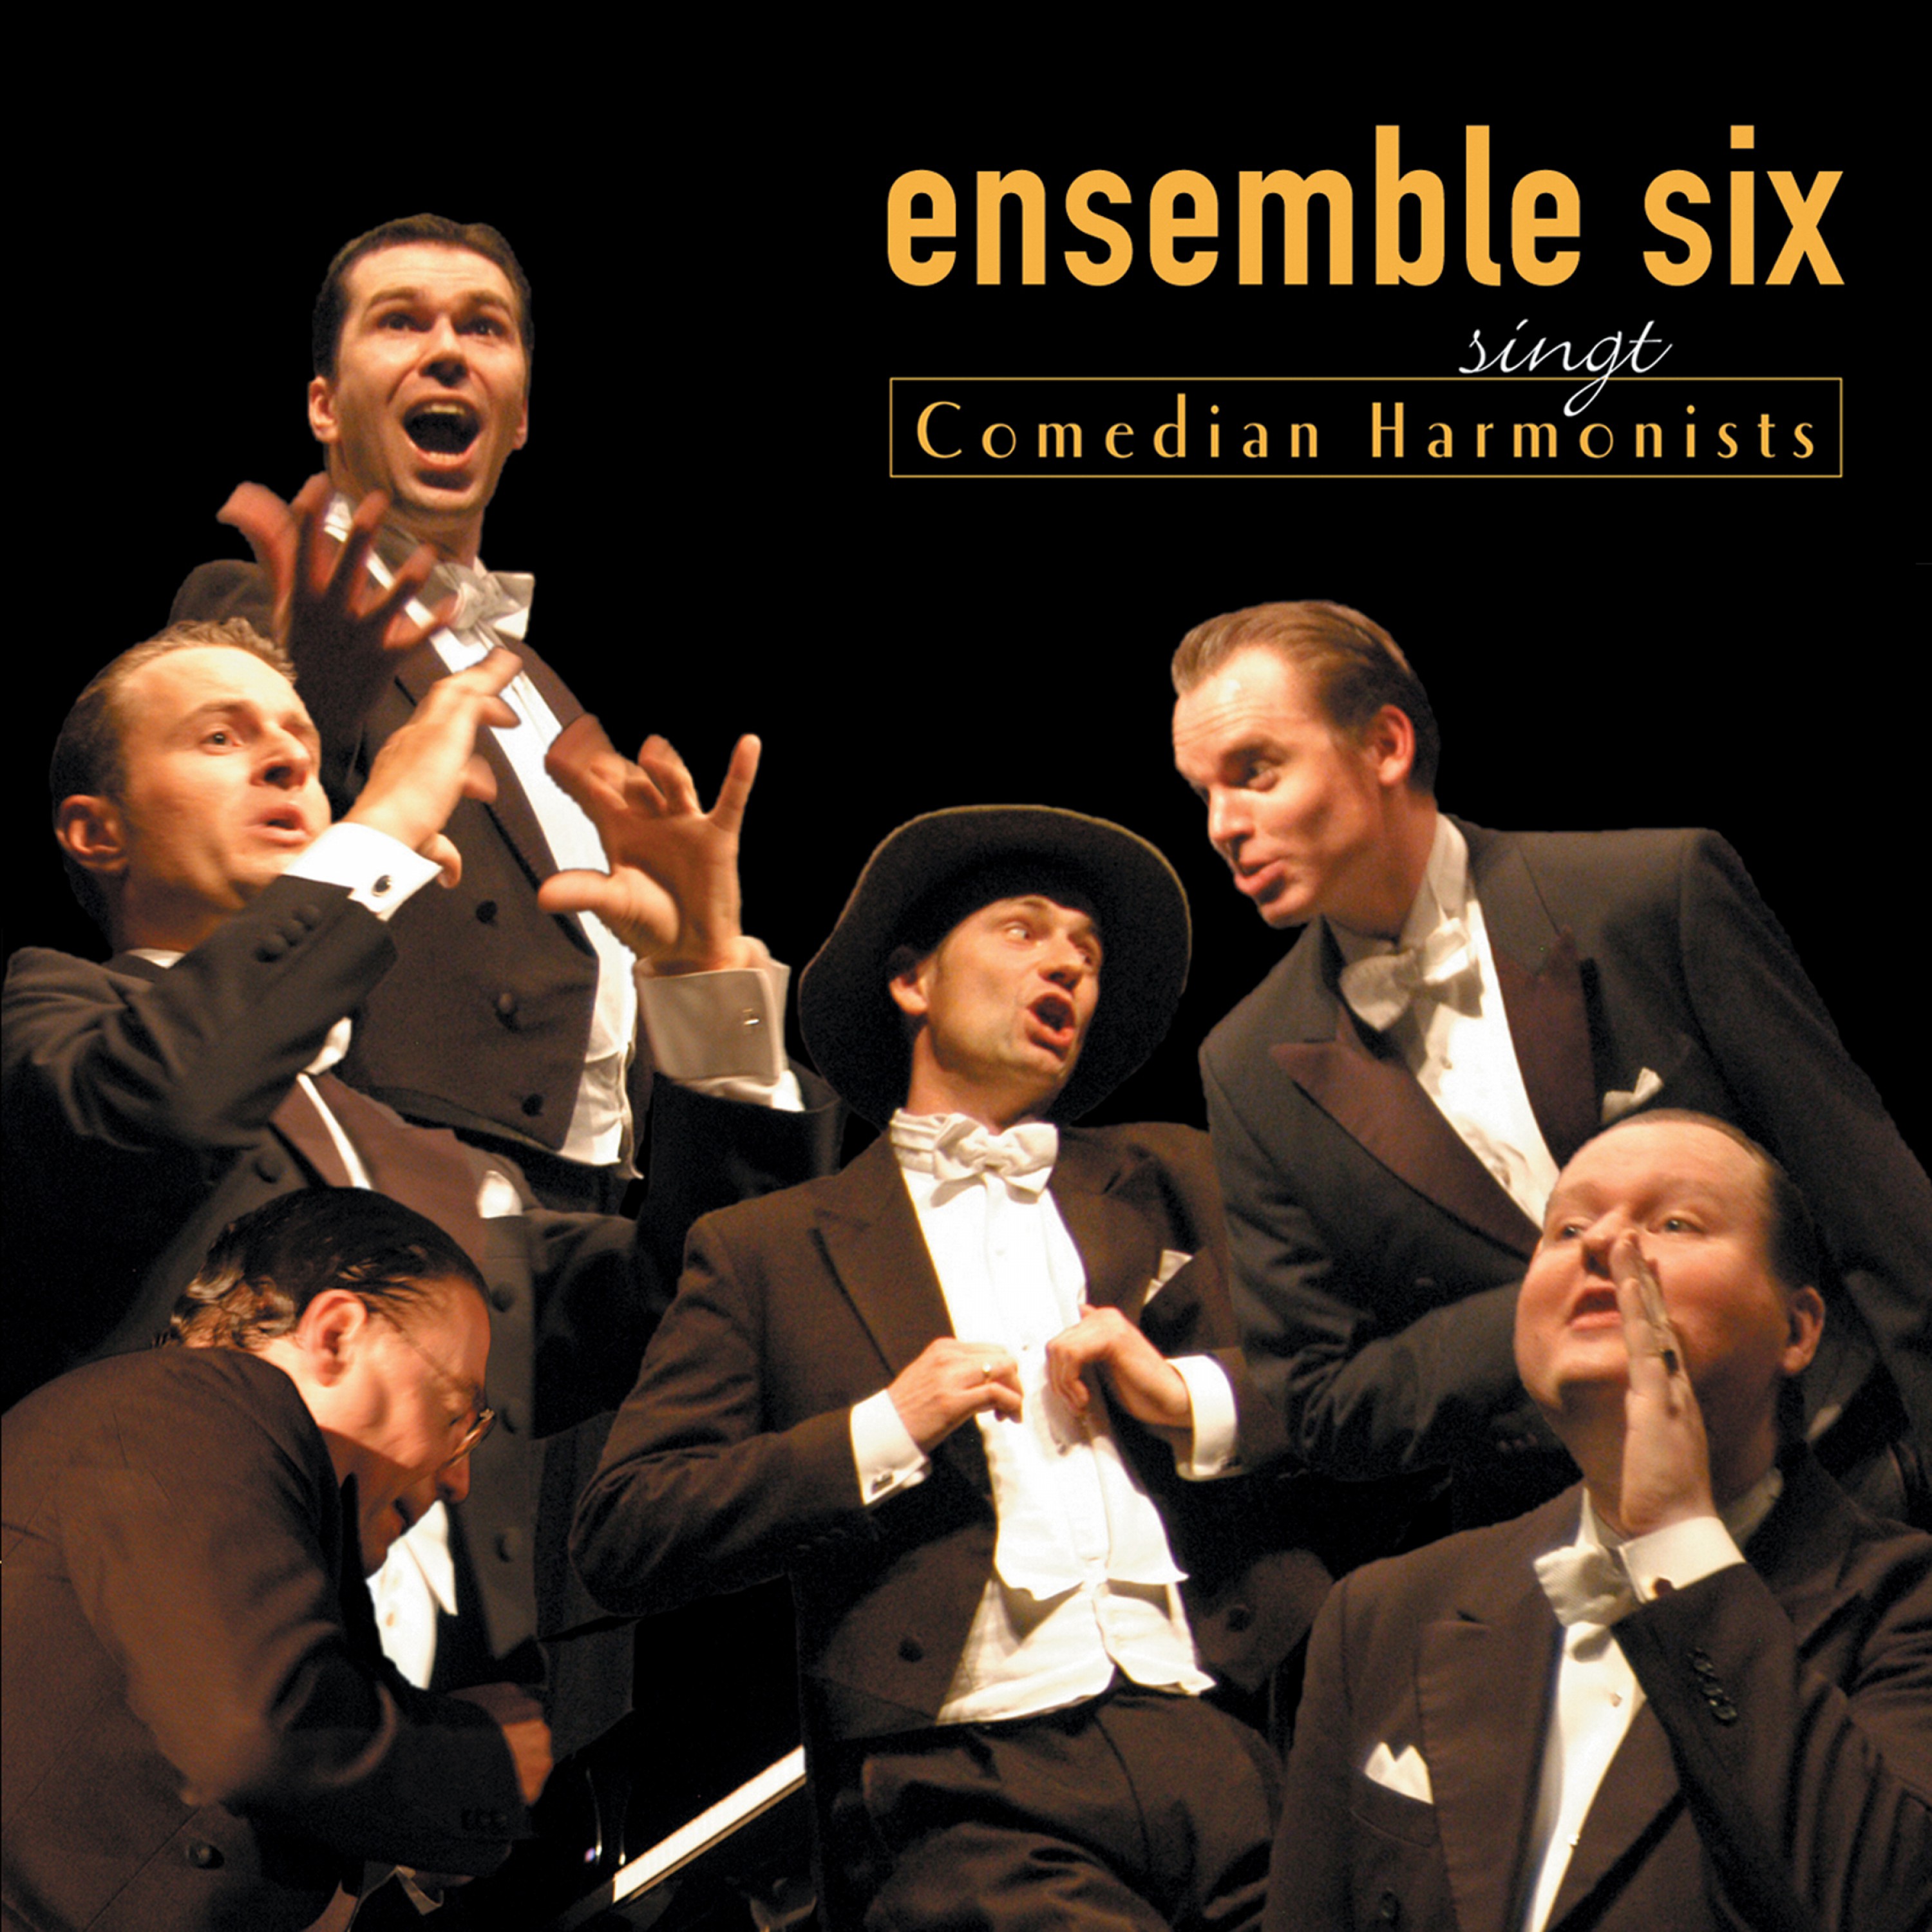 Ensemble Six Singt Comedian Harmonists